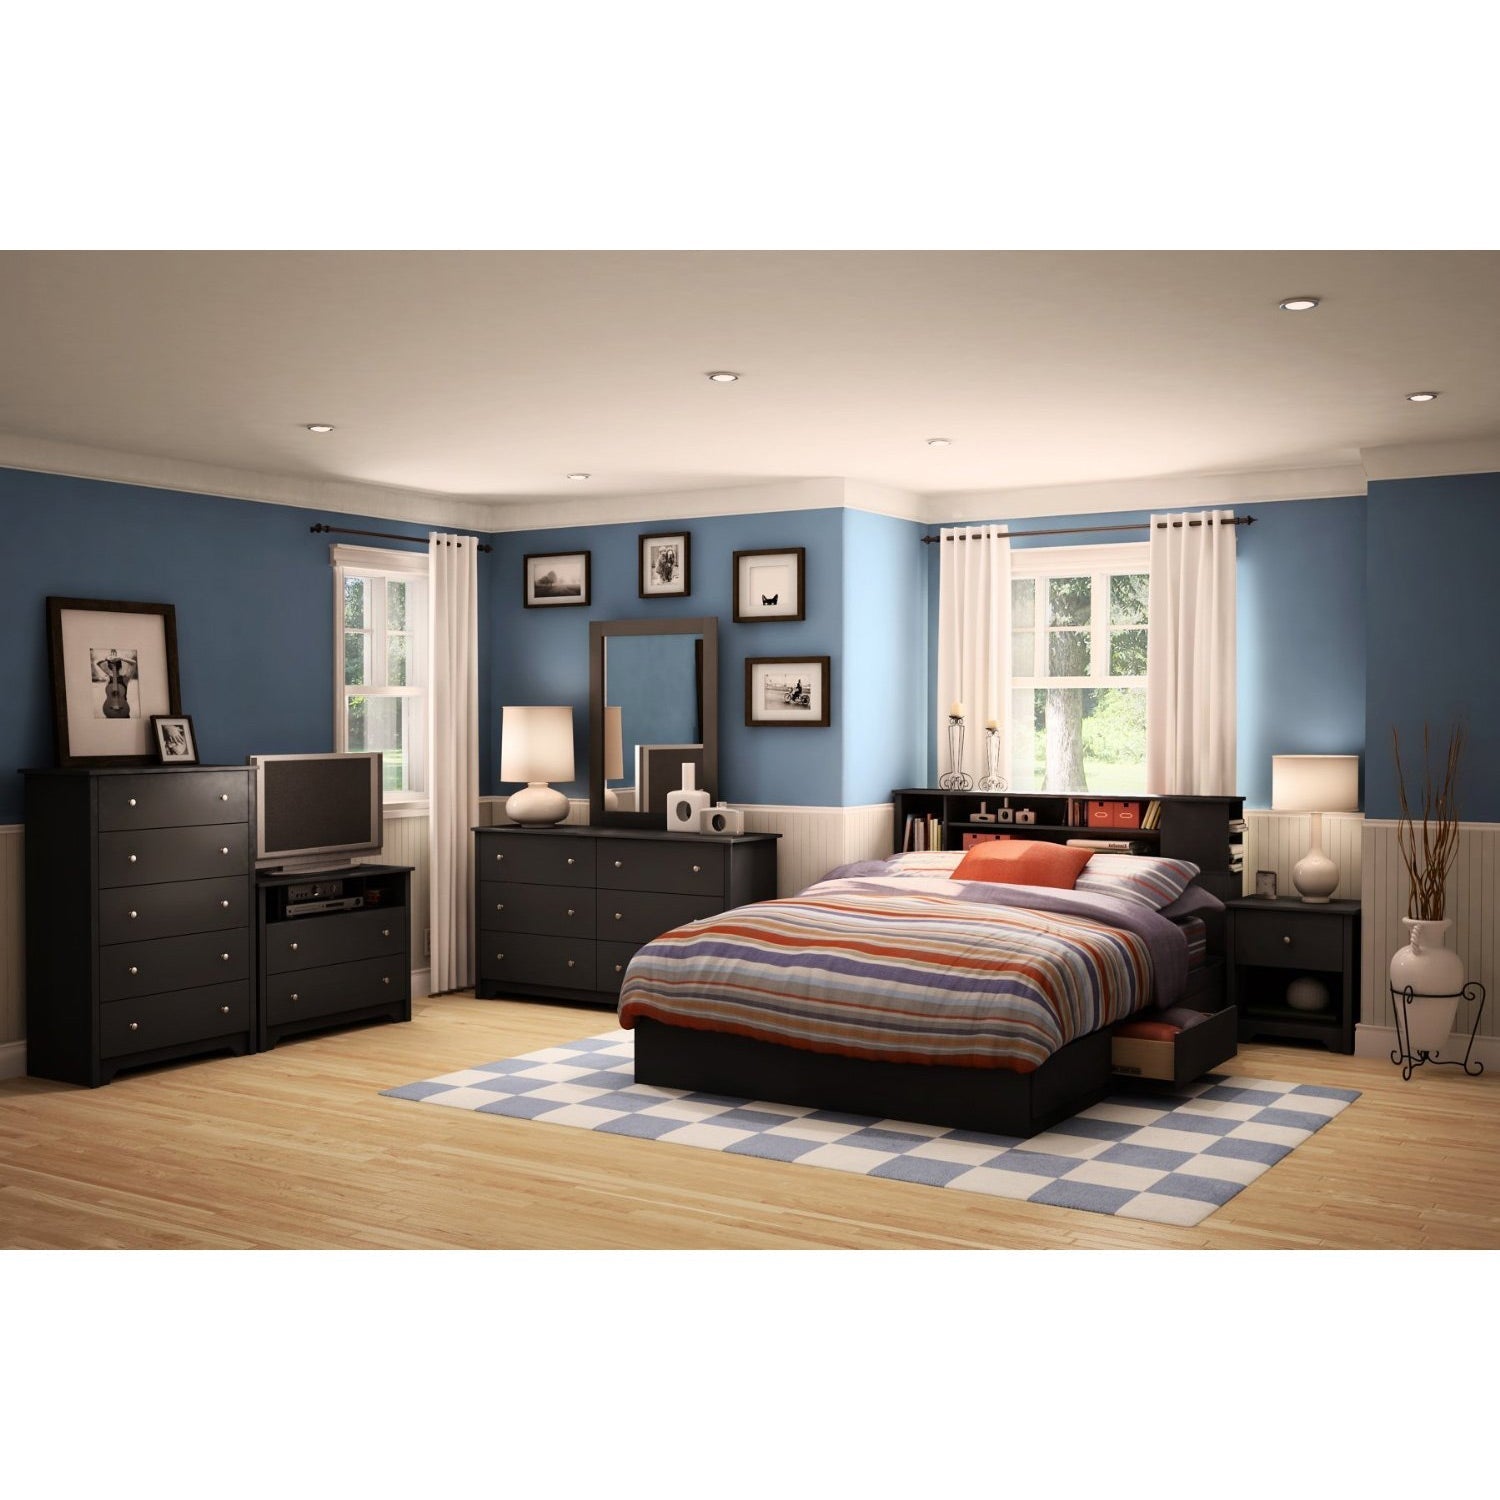 Bedroom > Nightstand And Dressers - Black 6 Drawer Bedroom Dresser With Nickle Metal Knobs Handles